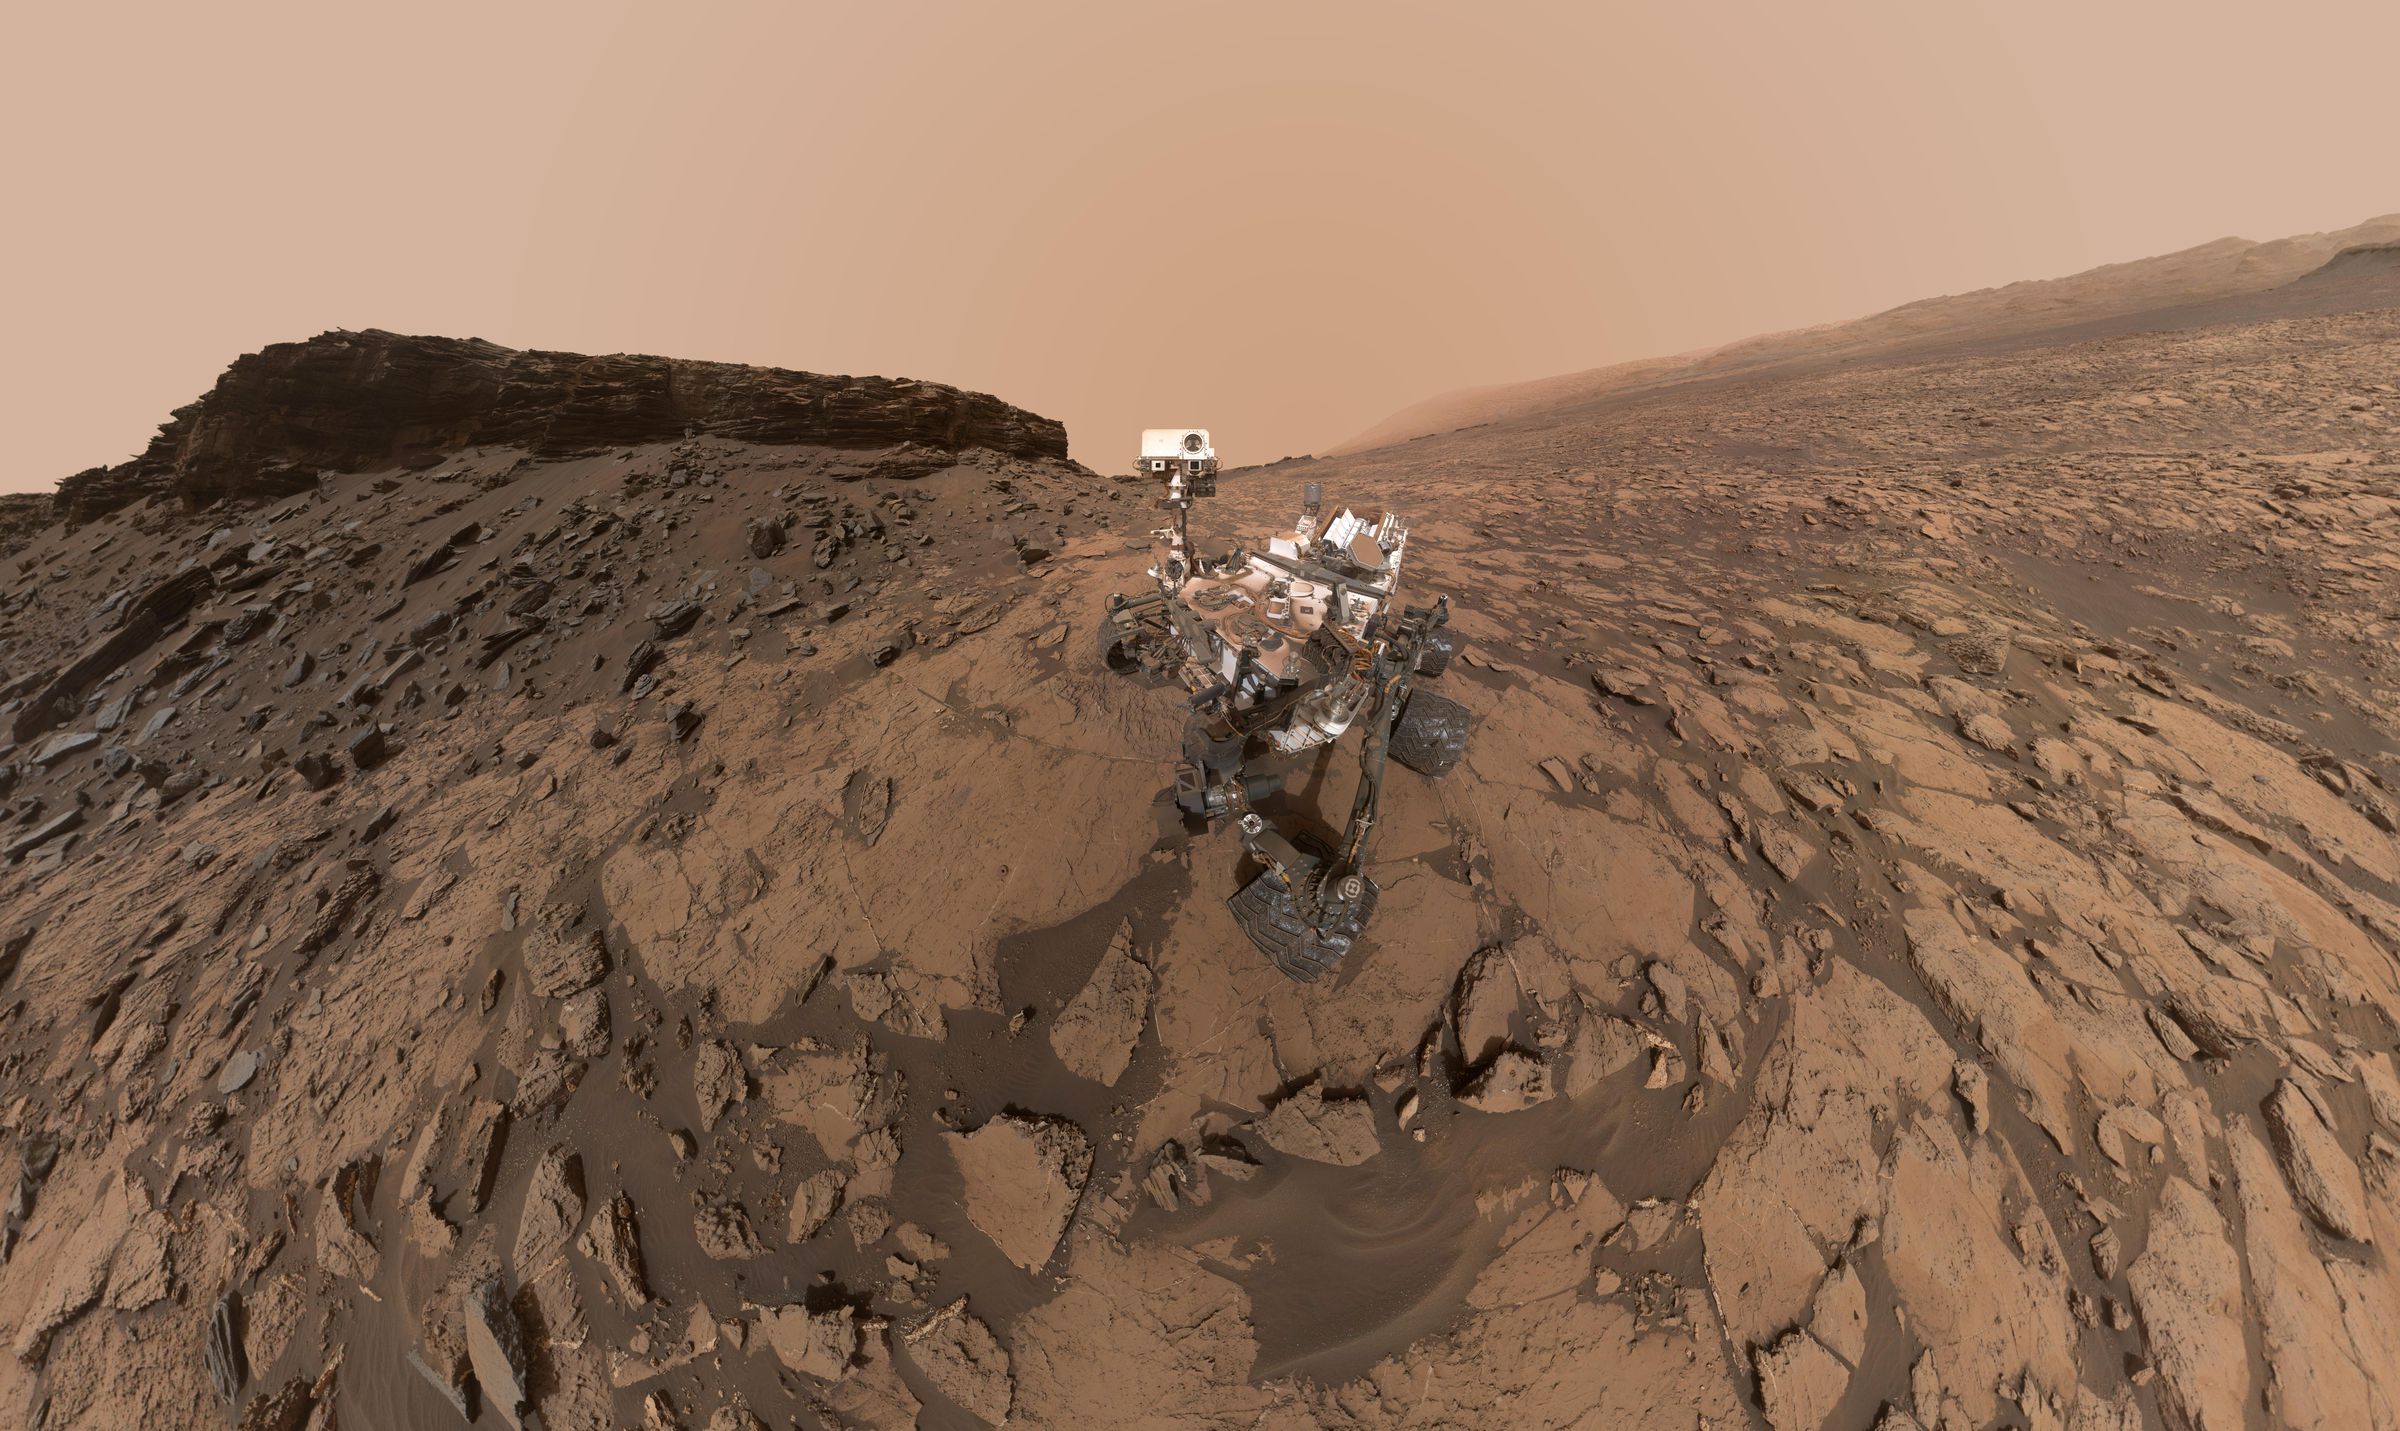 A self-portrait of NASA's Curiosity rover taken in September 2016.